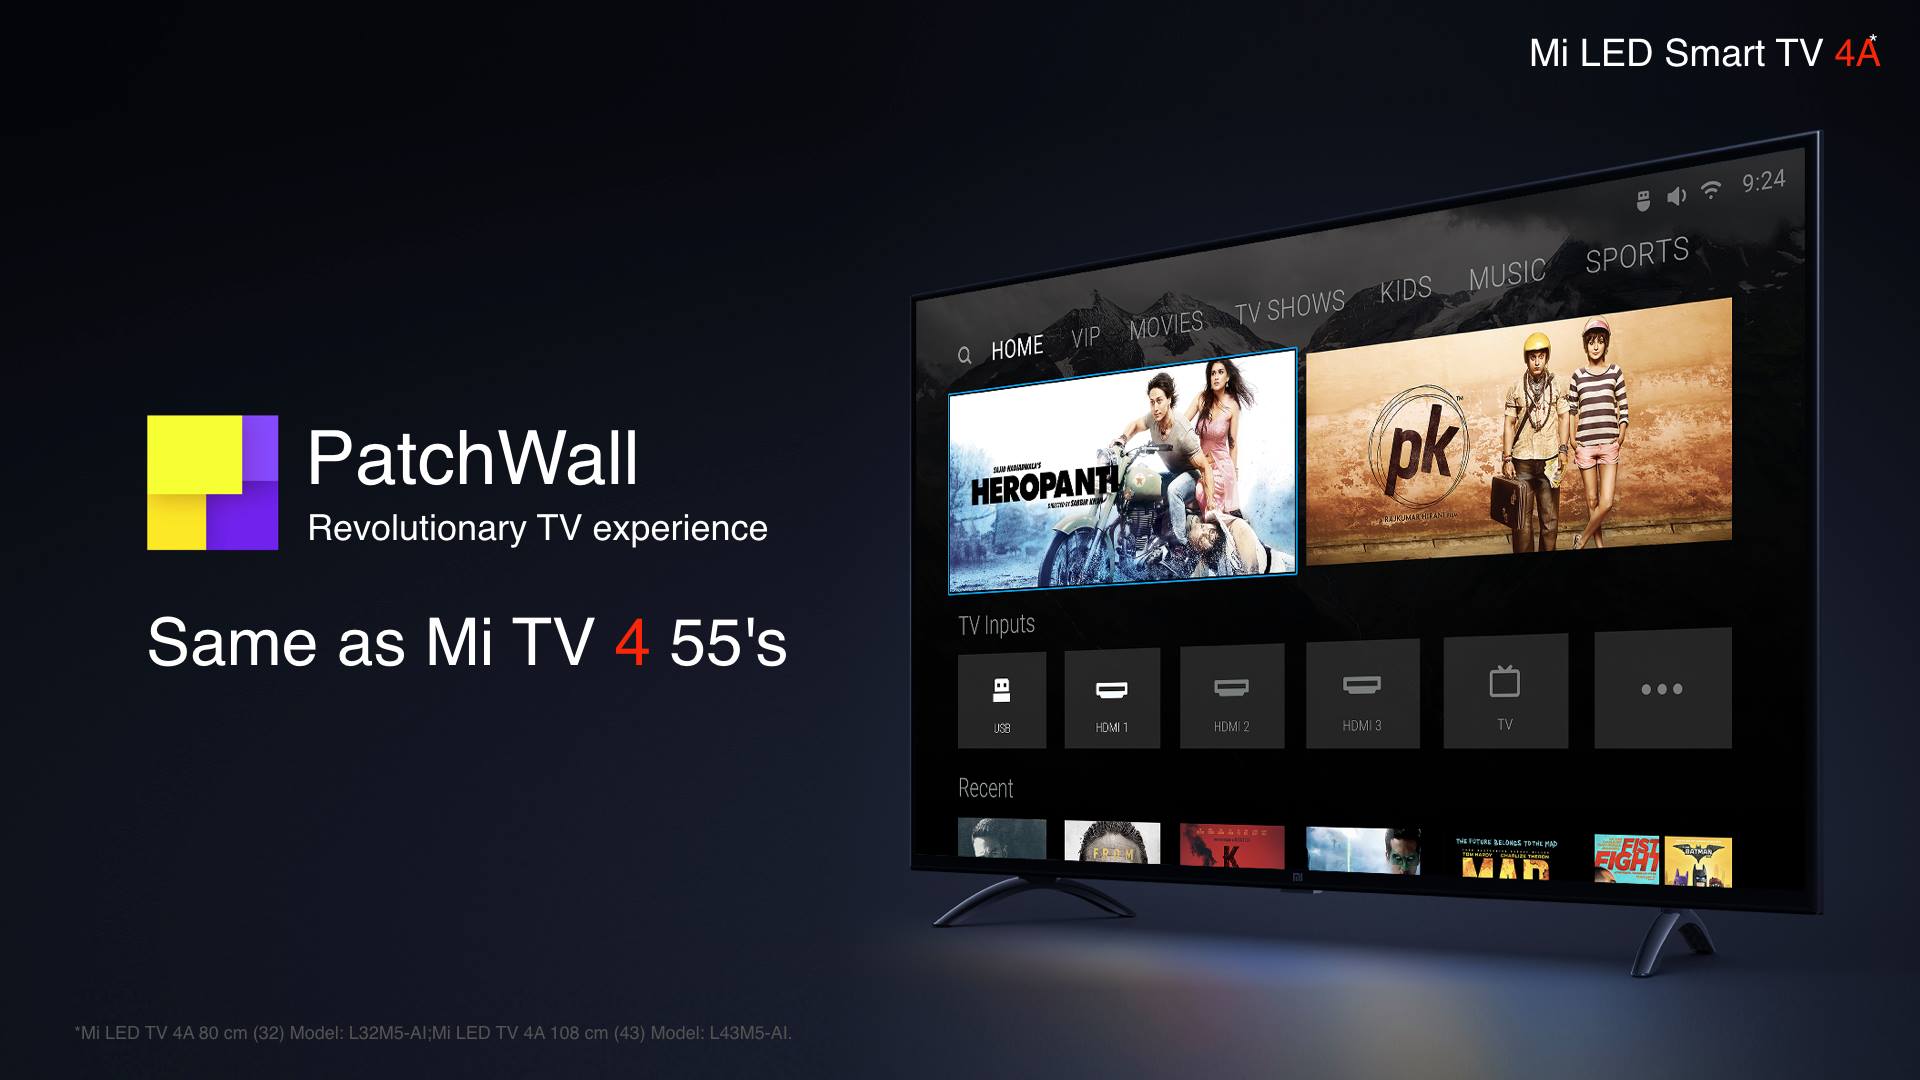 Xiaomi Mi Smart Tv 32